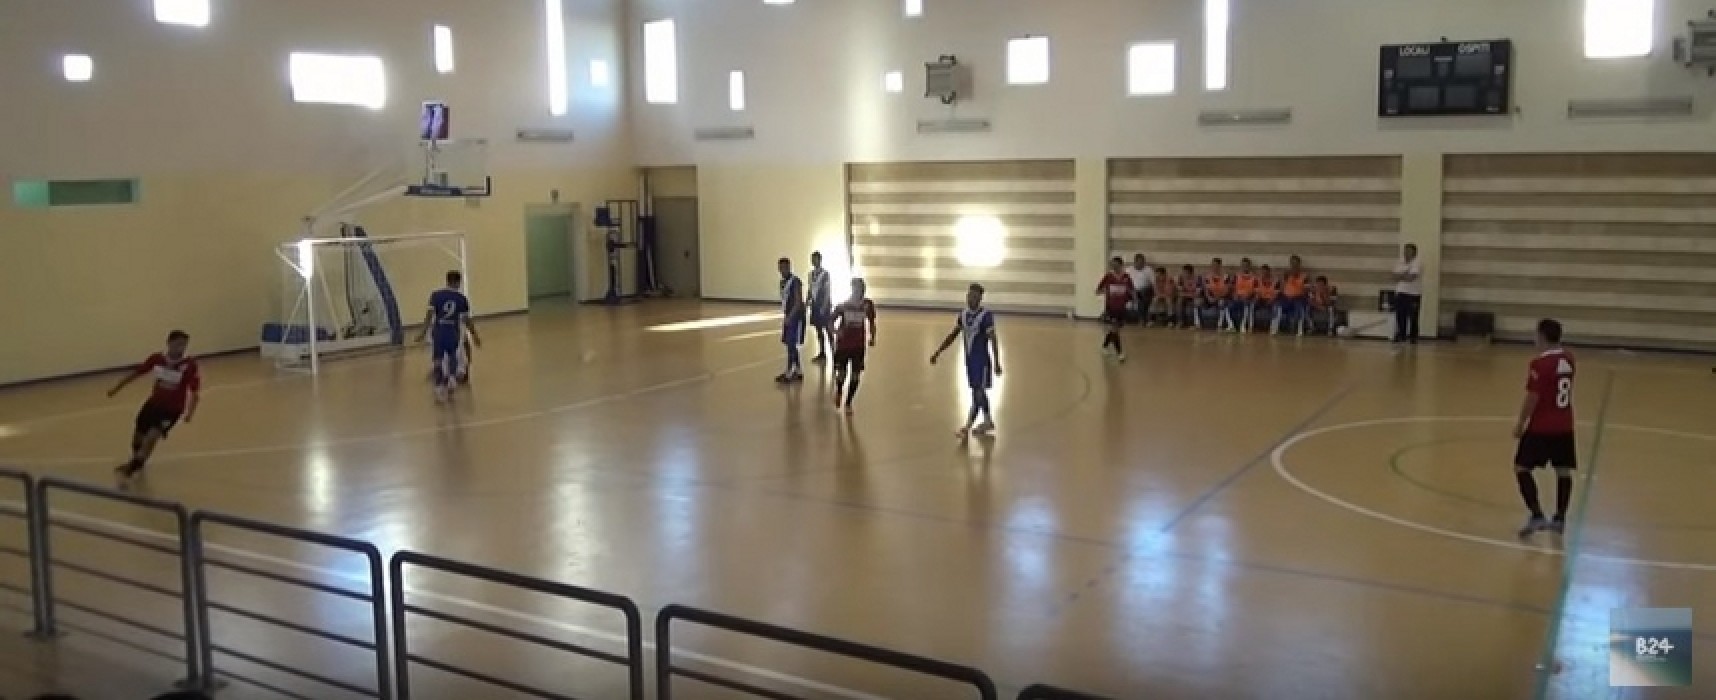 Futsal Messapia-Diaz 1-3/ VIDEO HIGHLIGHTS